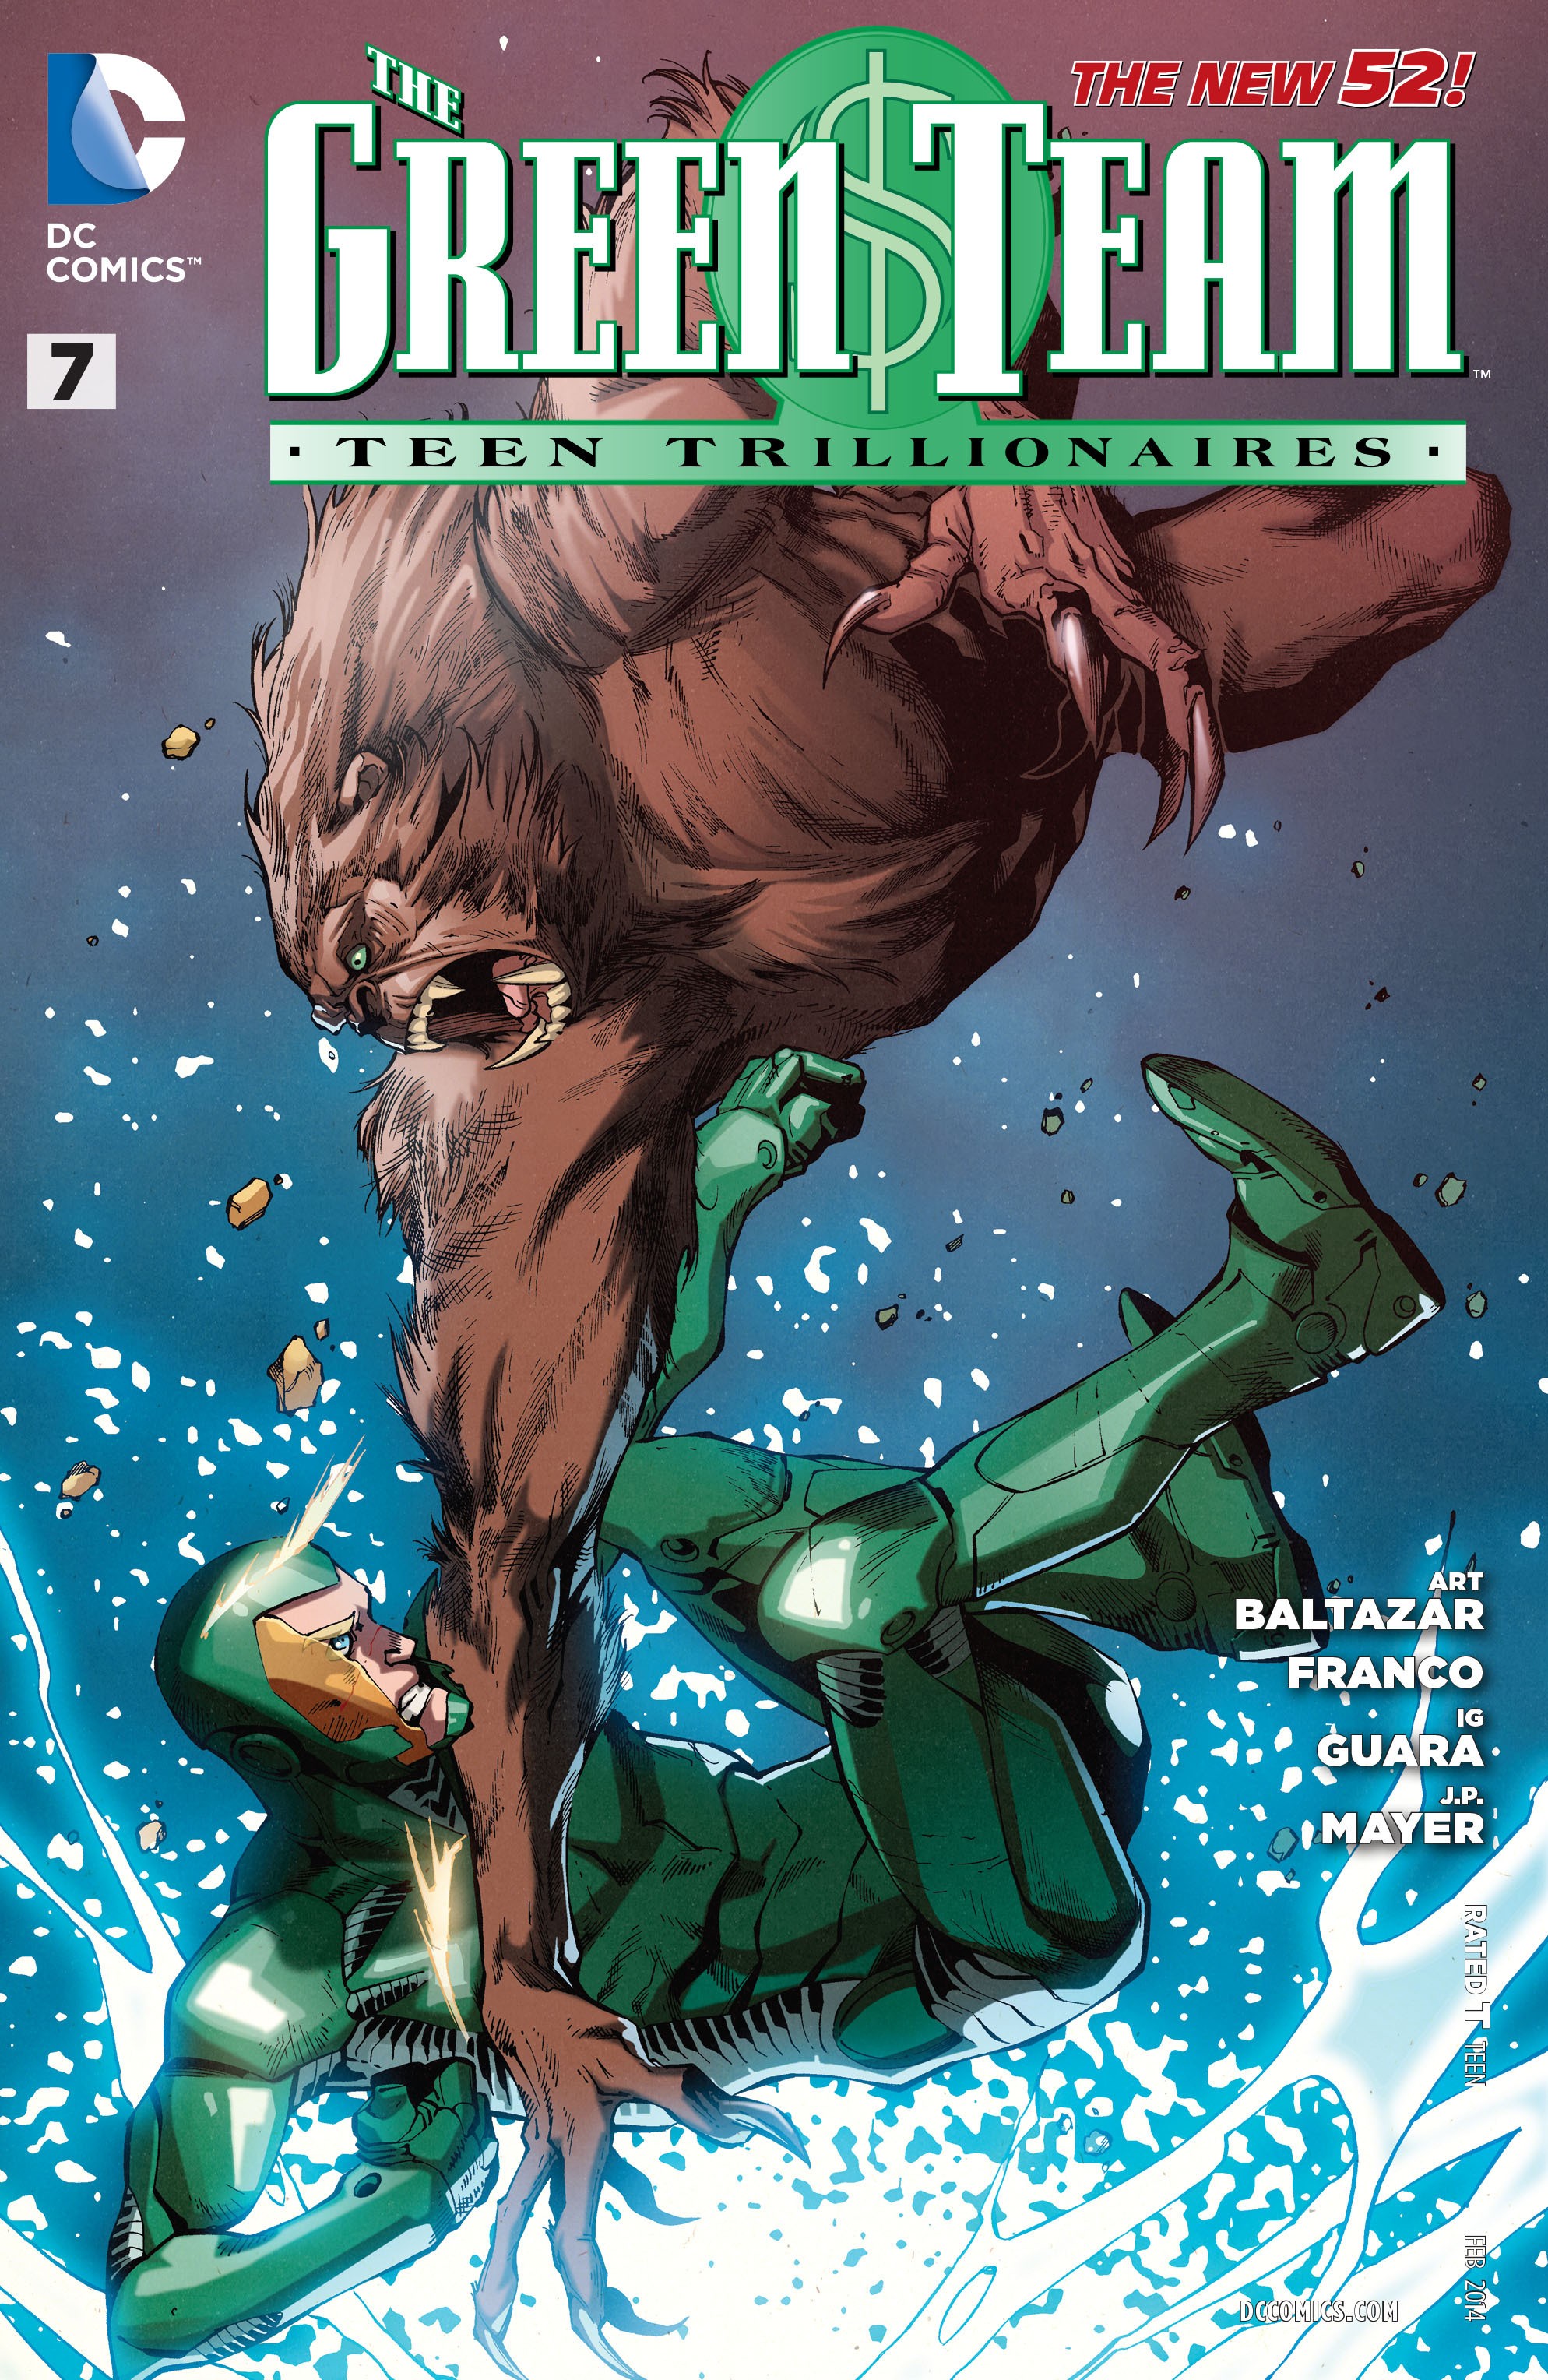 Green Team: Teen Trillionaires Vol. 1 #7